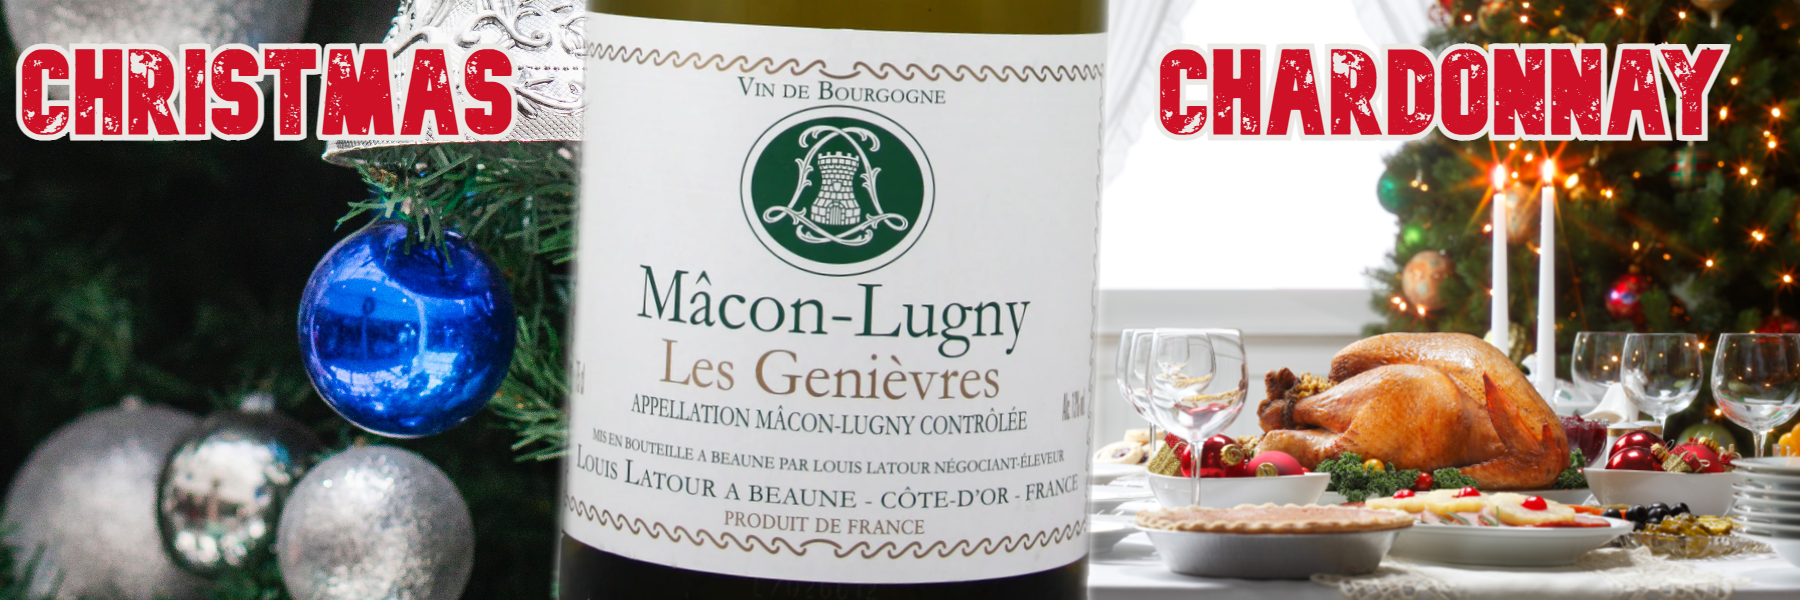 Buy Christmas Chardonnay - Macon-Lugny "Les Genievres", Louis Latour, 2019 for £12.50/bottle